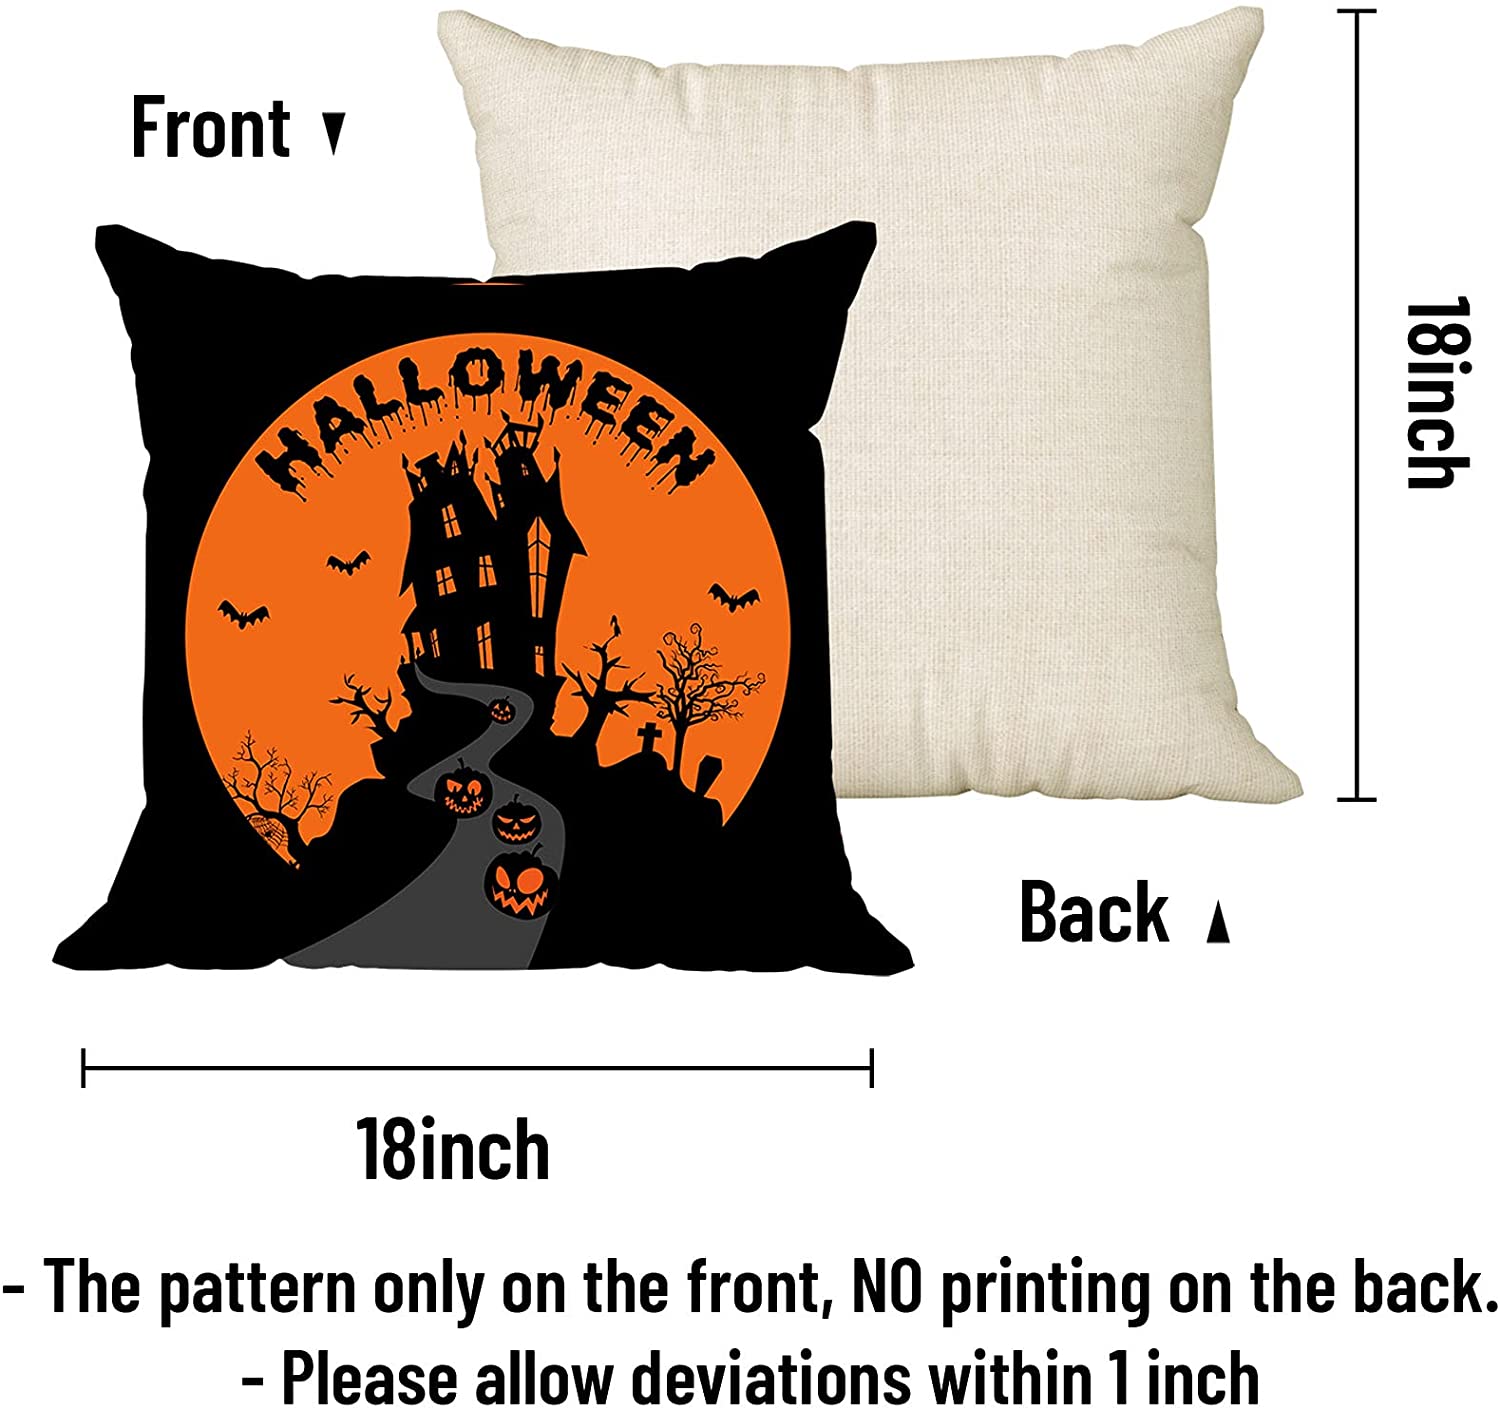 Set of 4 Halloween Pillow Covers 18 x 18 with 4 Bonus Coasters (Black Cat, Castle)